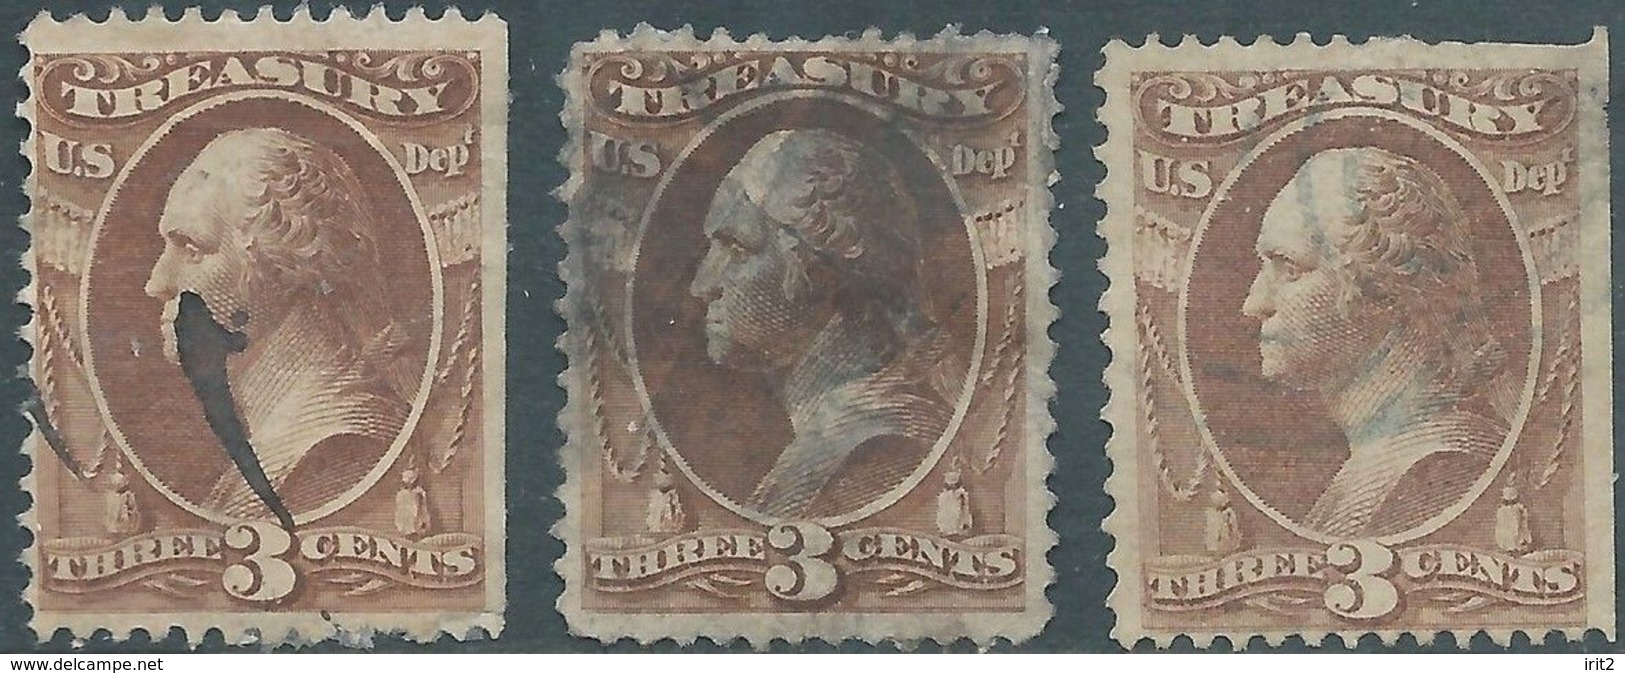 Stati Uniti D'america,United States,U.S.A,1873 Revenue Stamps 3c MINISTRY OF TREASURY,Used - Dienstmarken